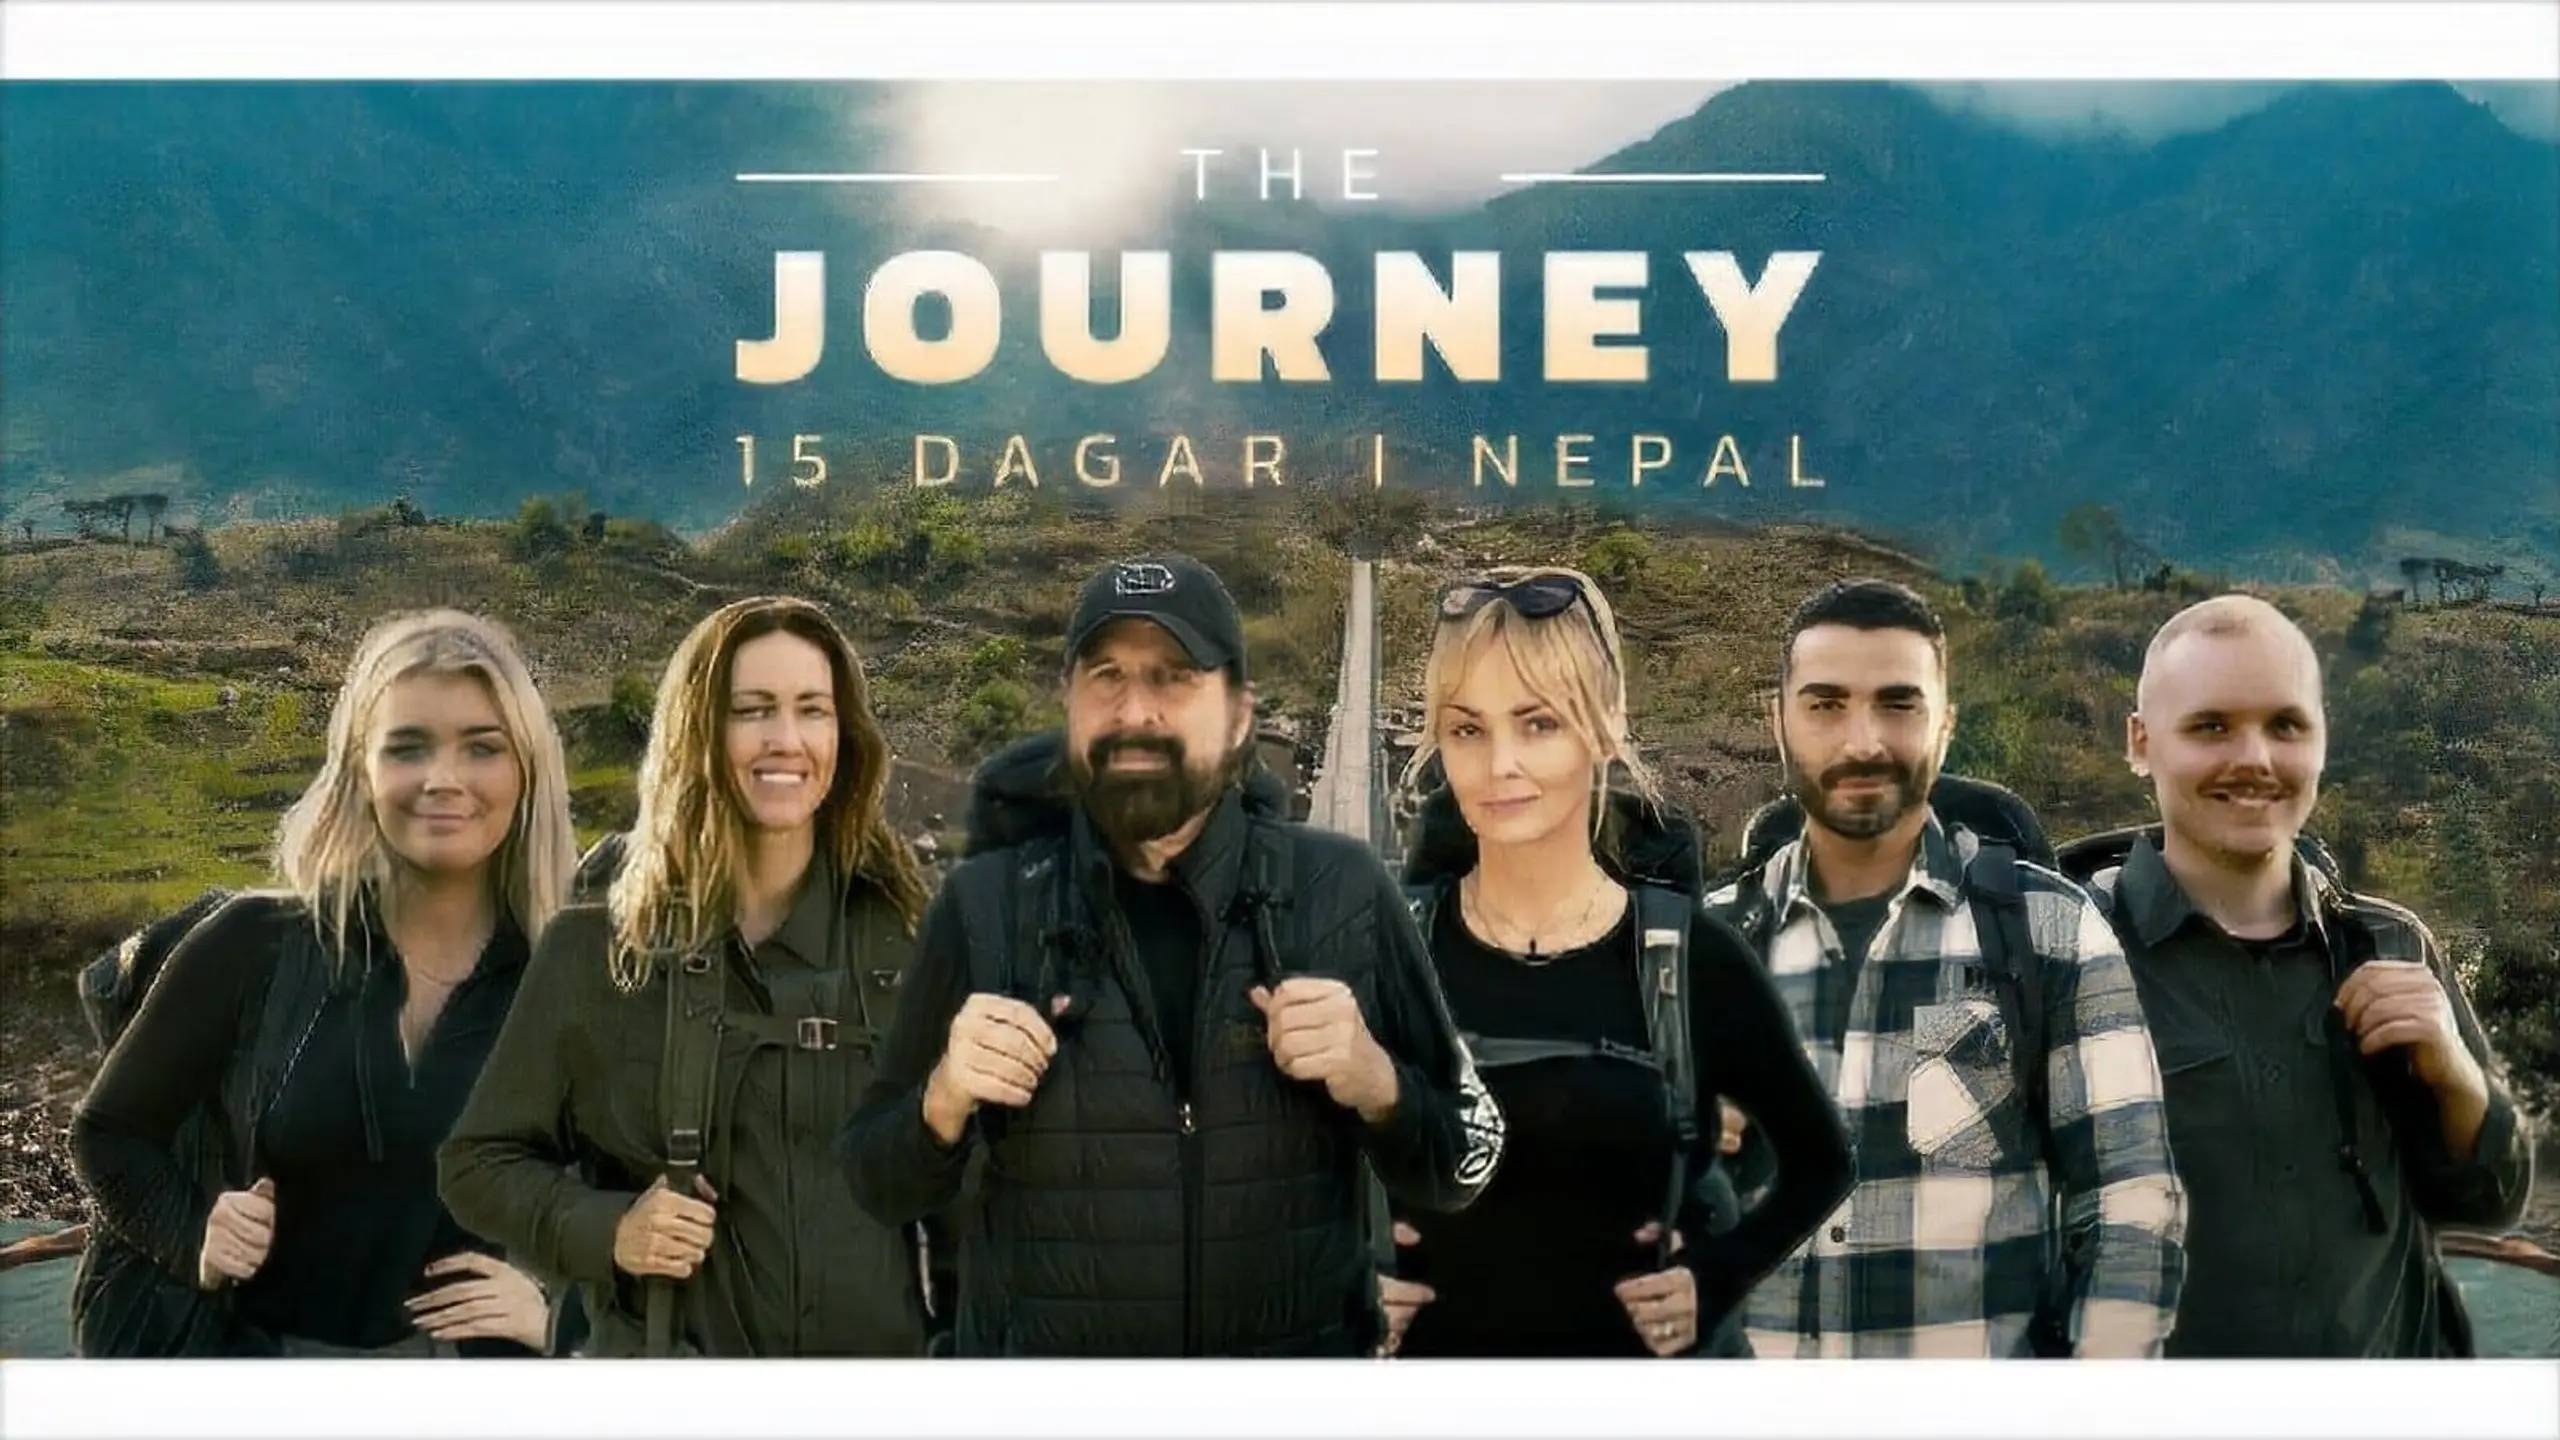 The Journey - 15 dagar i Nepal